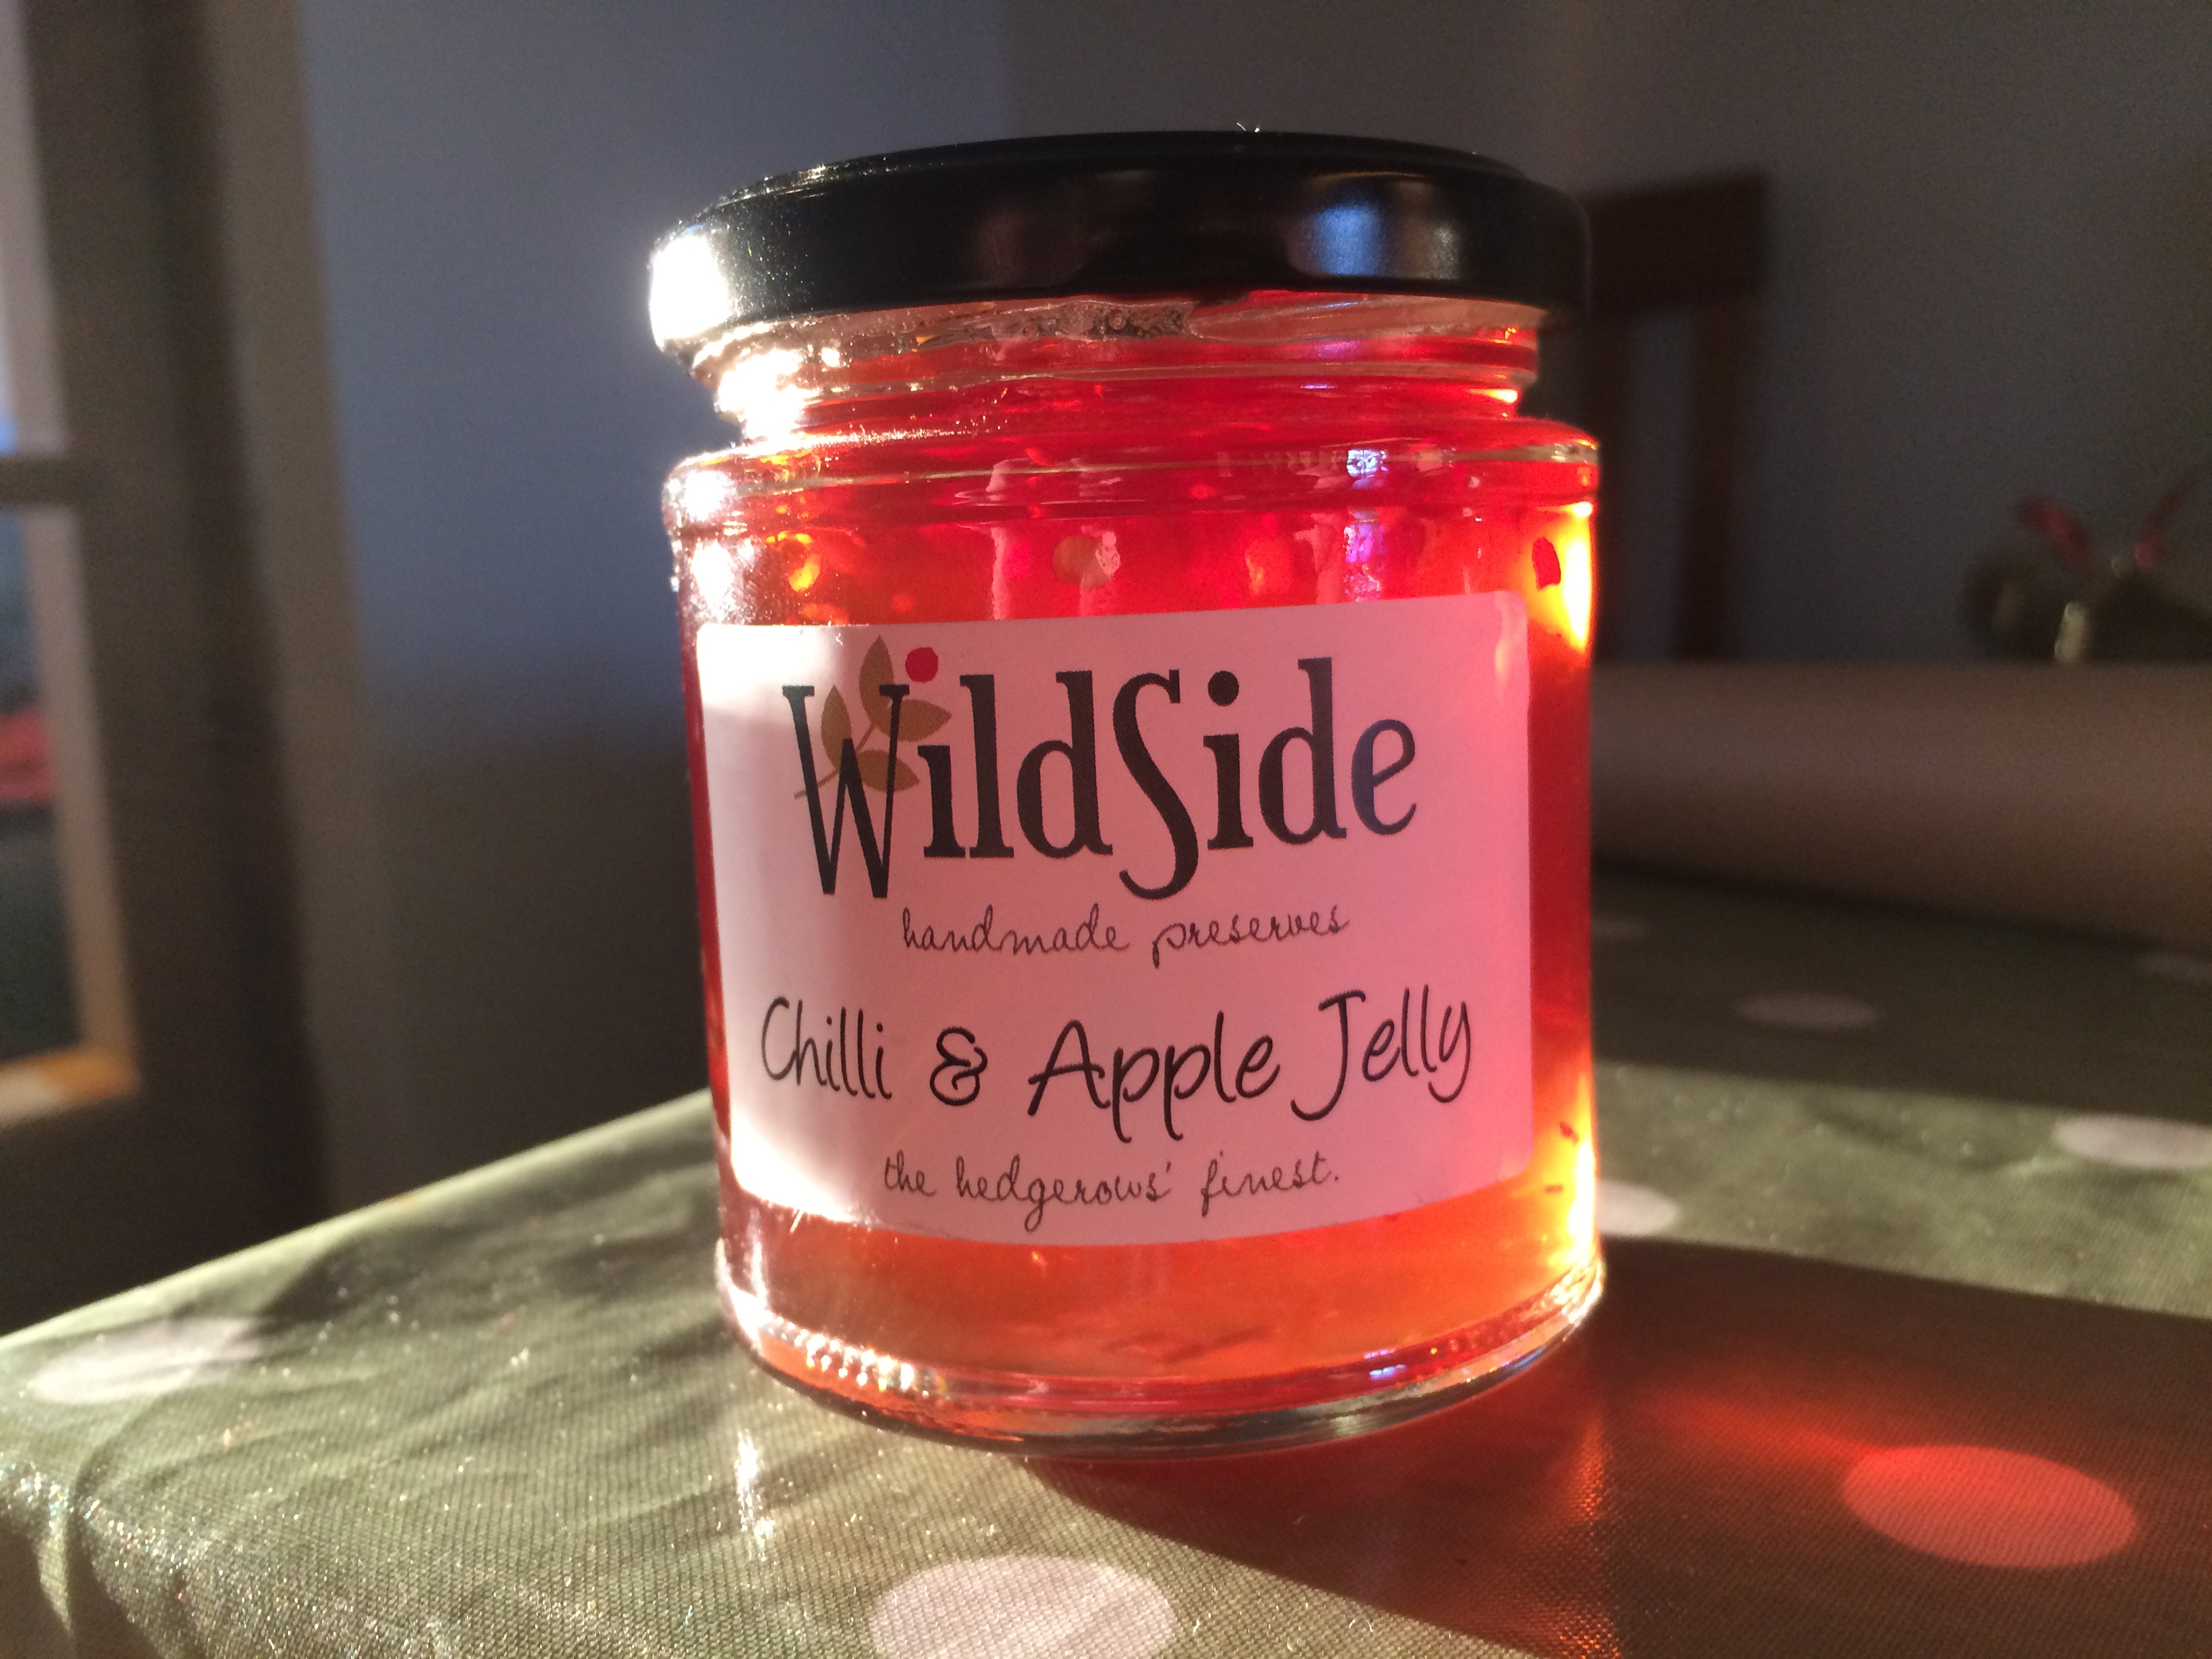 Chilli Apple Jelly